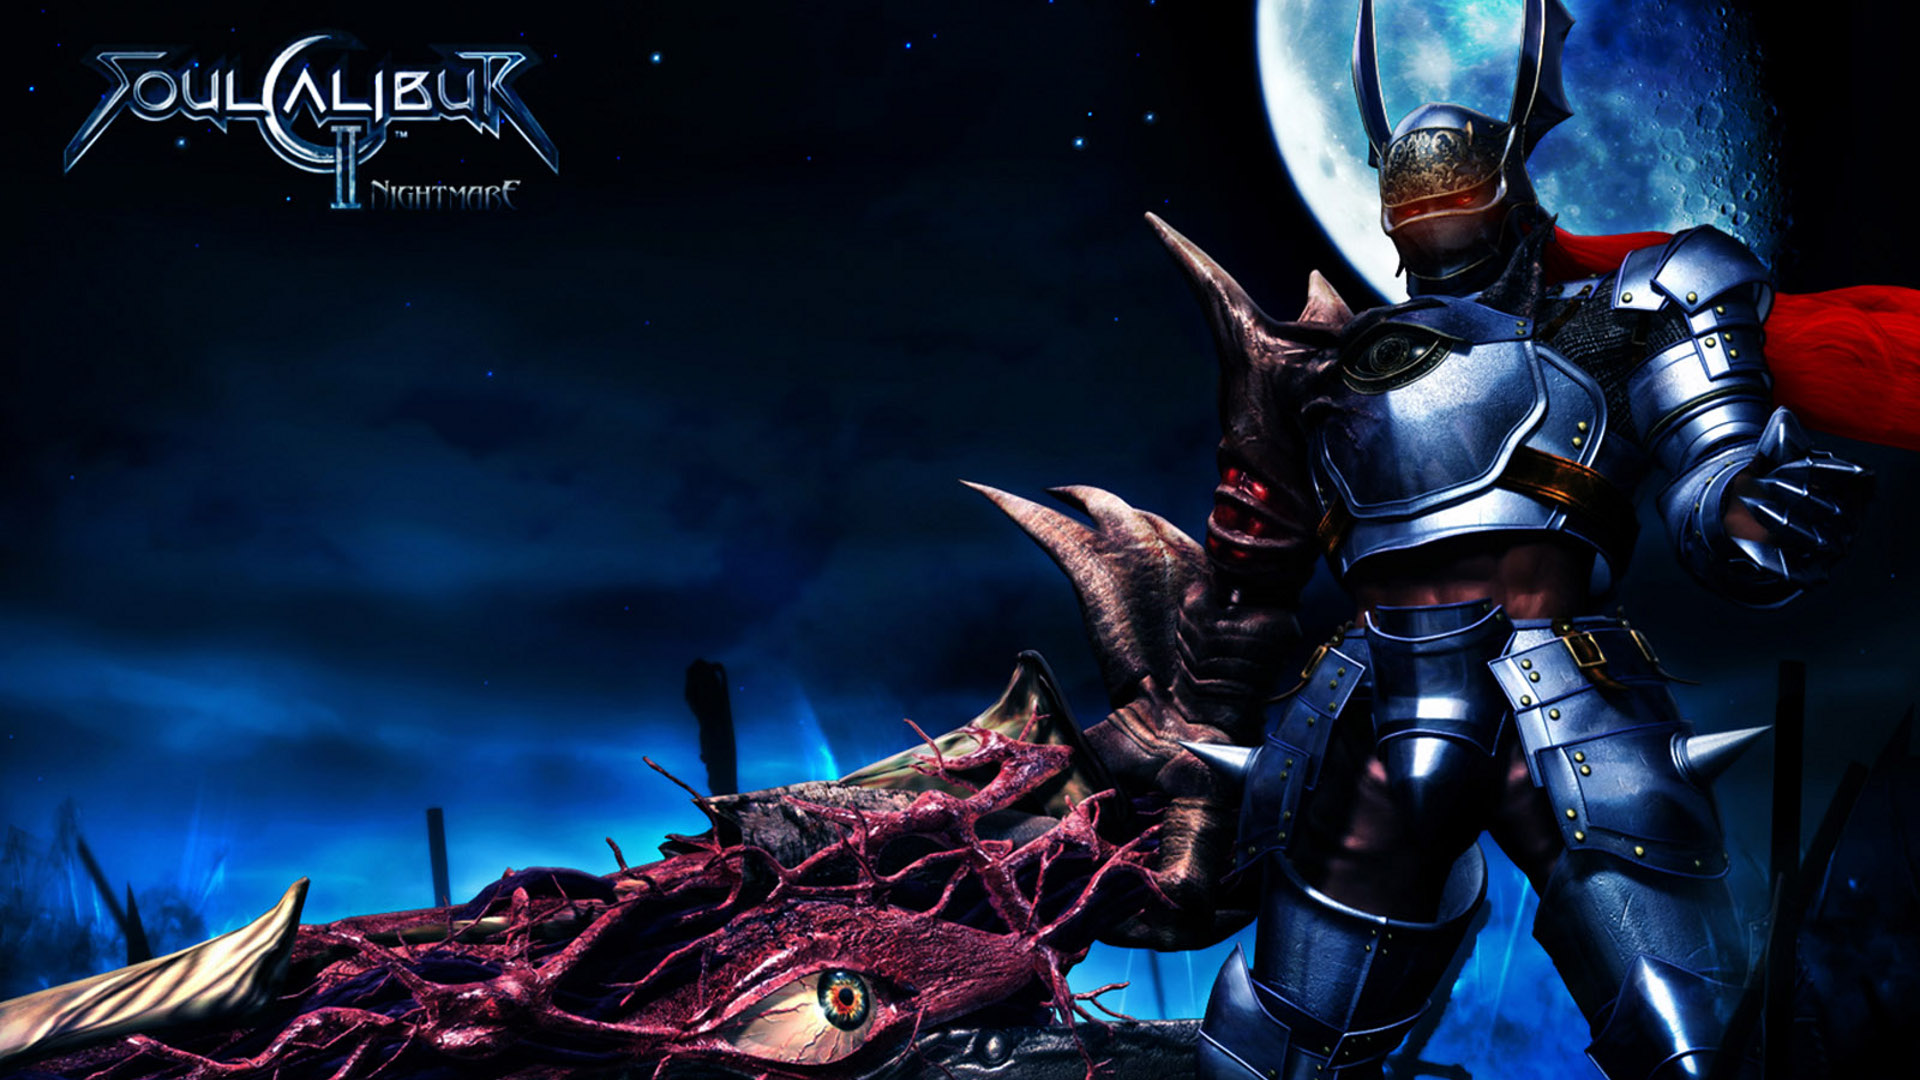 Video Game SoulCalibur II HD Wallpaper | Background Image